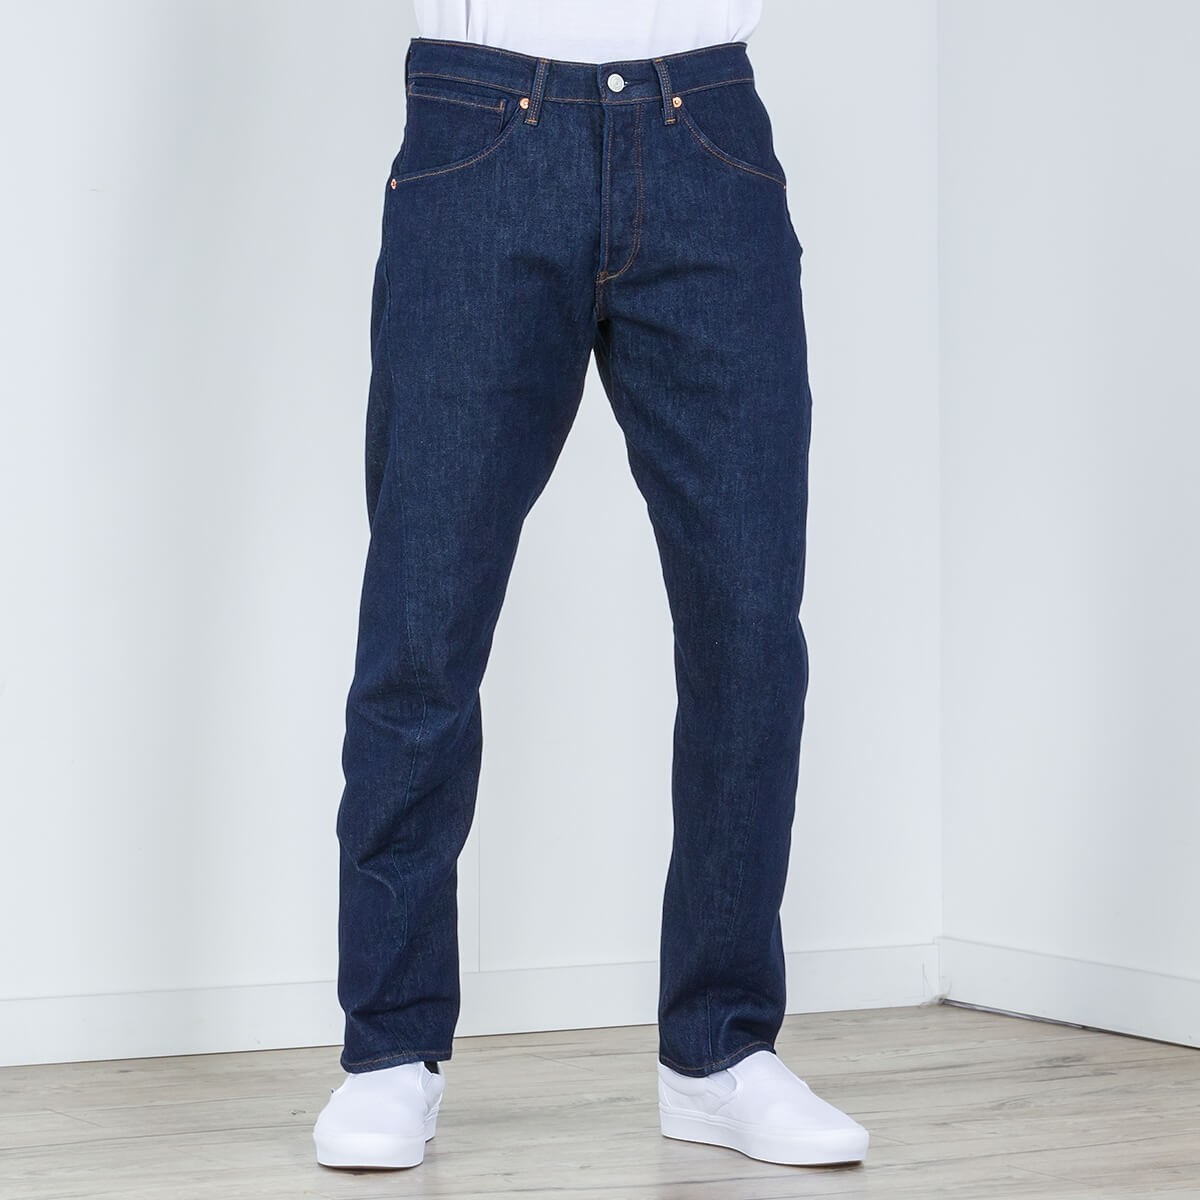 levi 6 pocket jeans